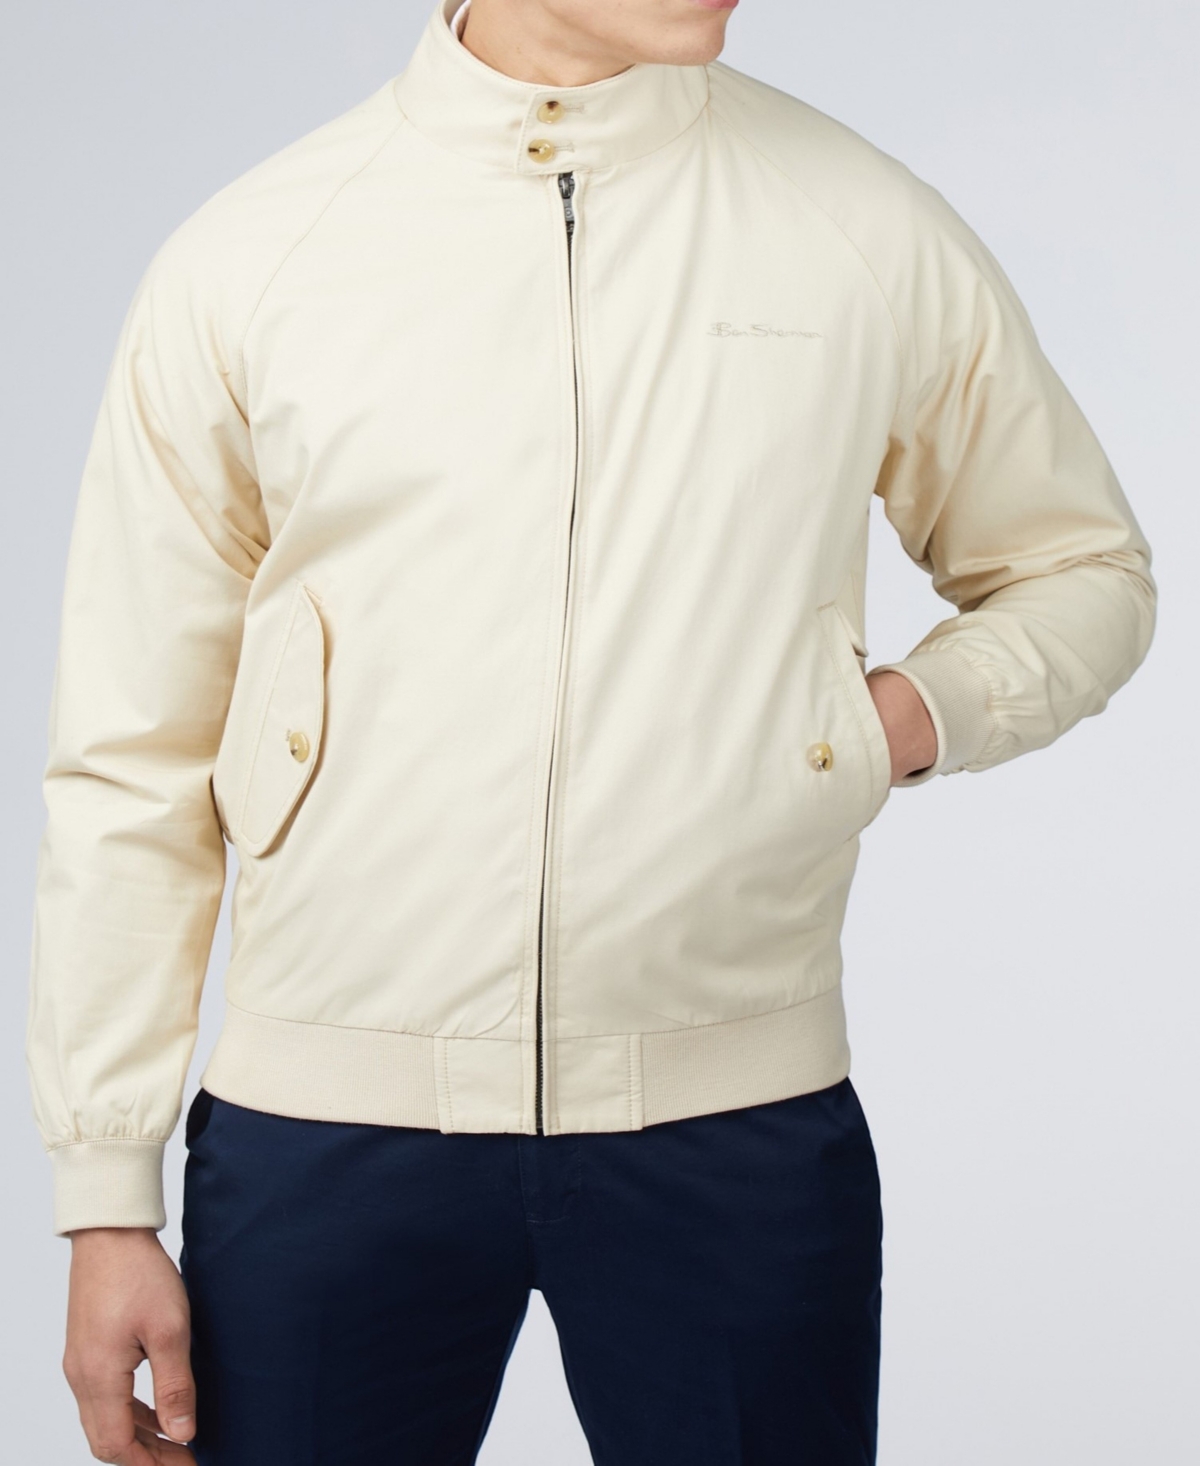 Men's Signature Harrington Long Sleeve Jacket - Cream